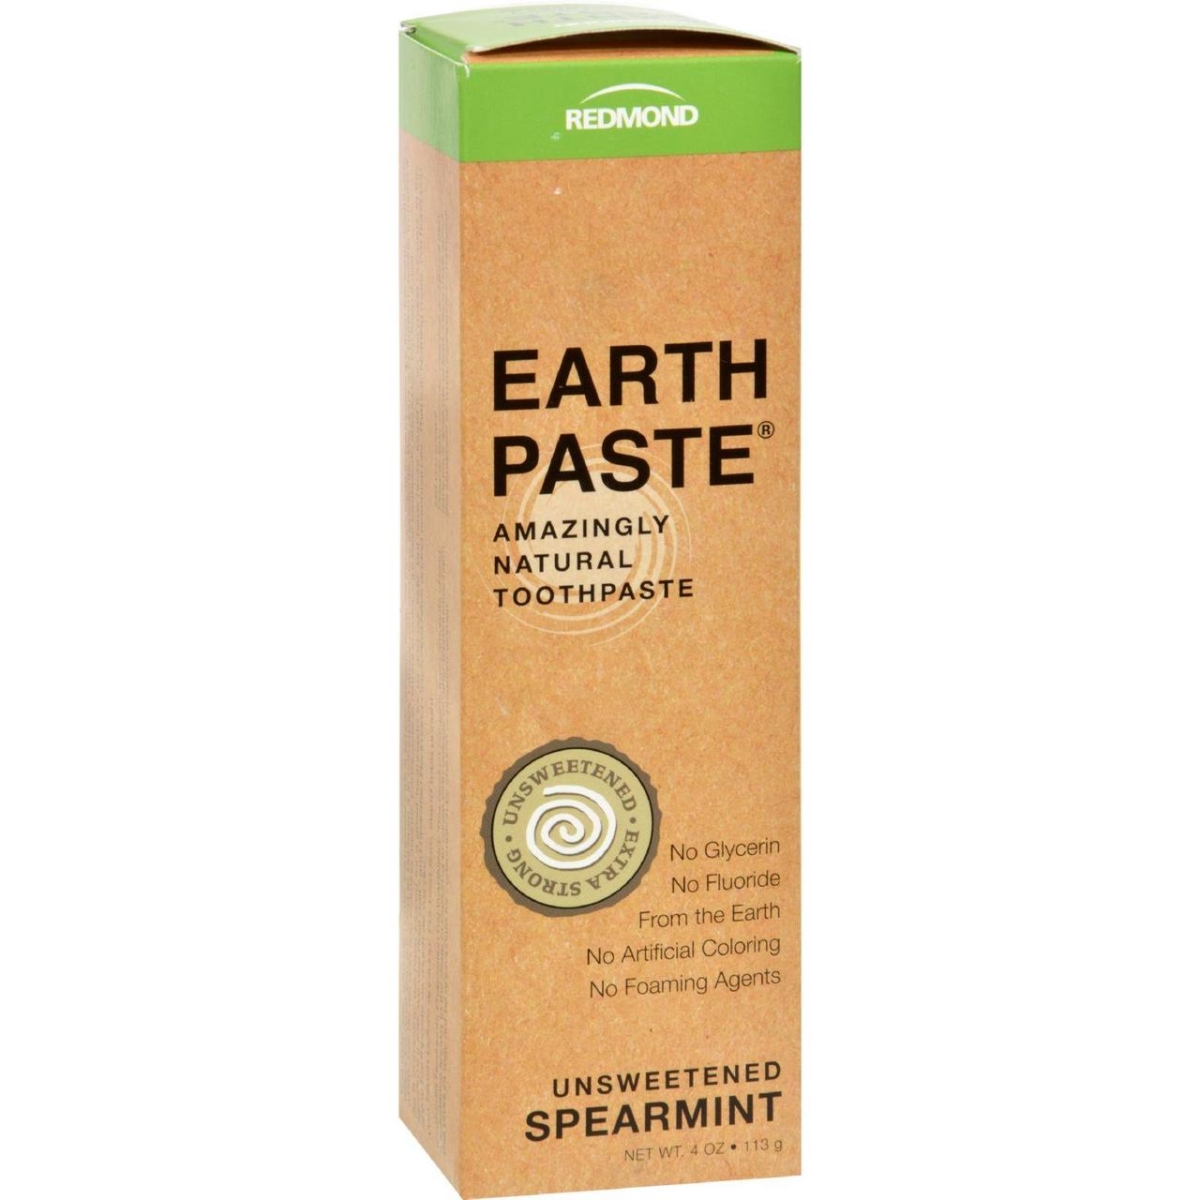 Hg1512201 4 Oz Earthpaste - Spearmint